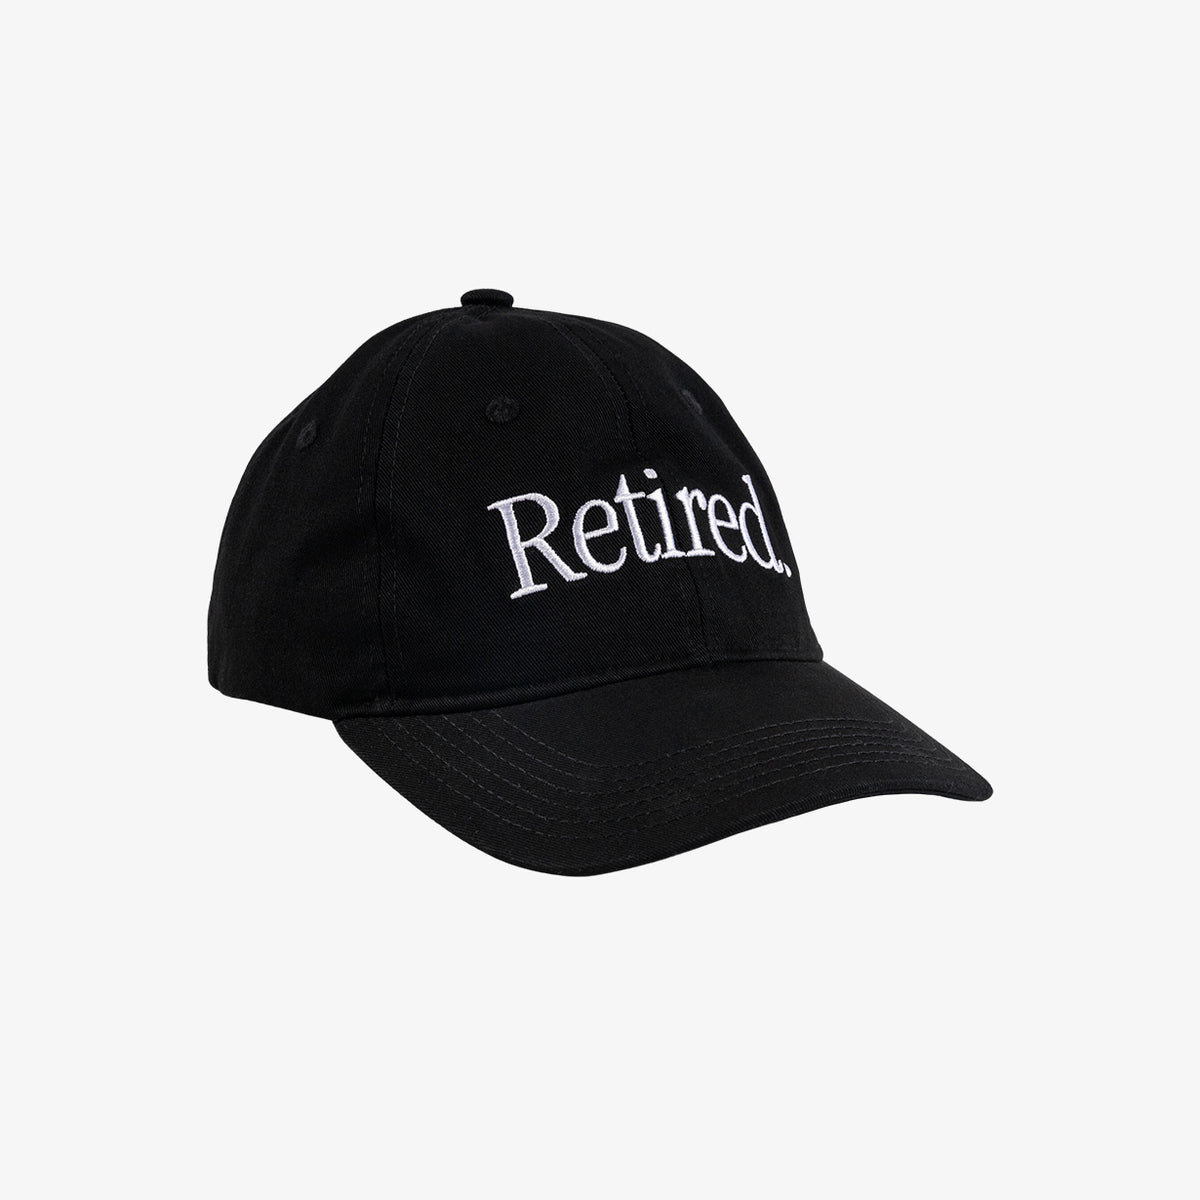 Retired Hat - Black